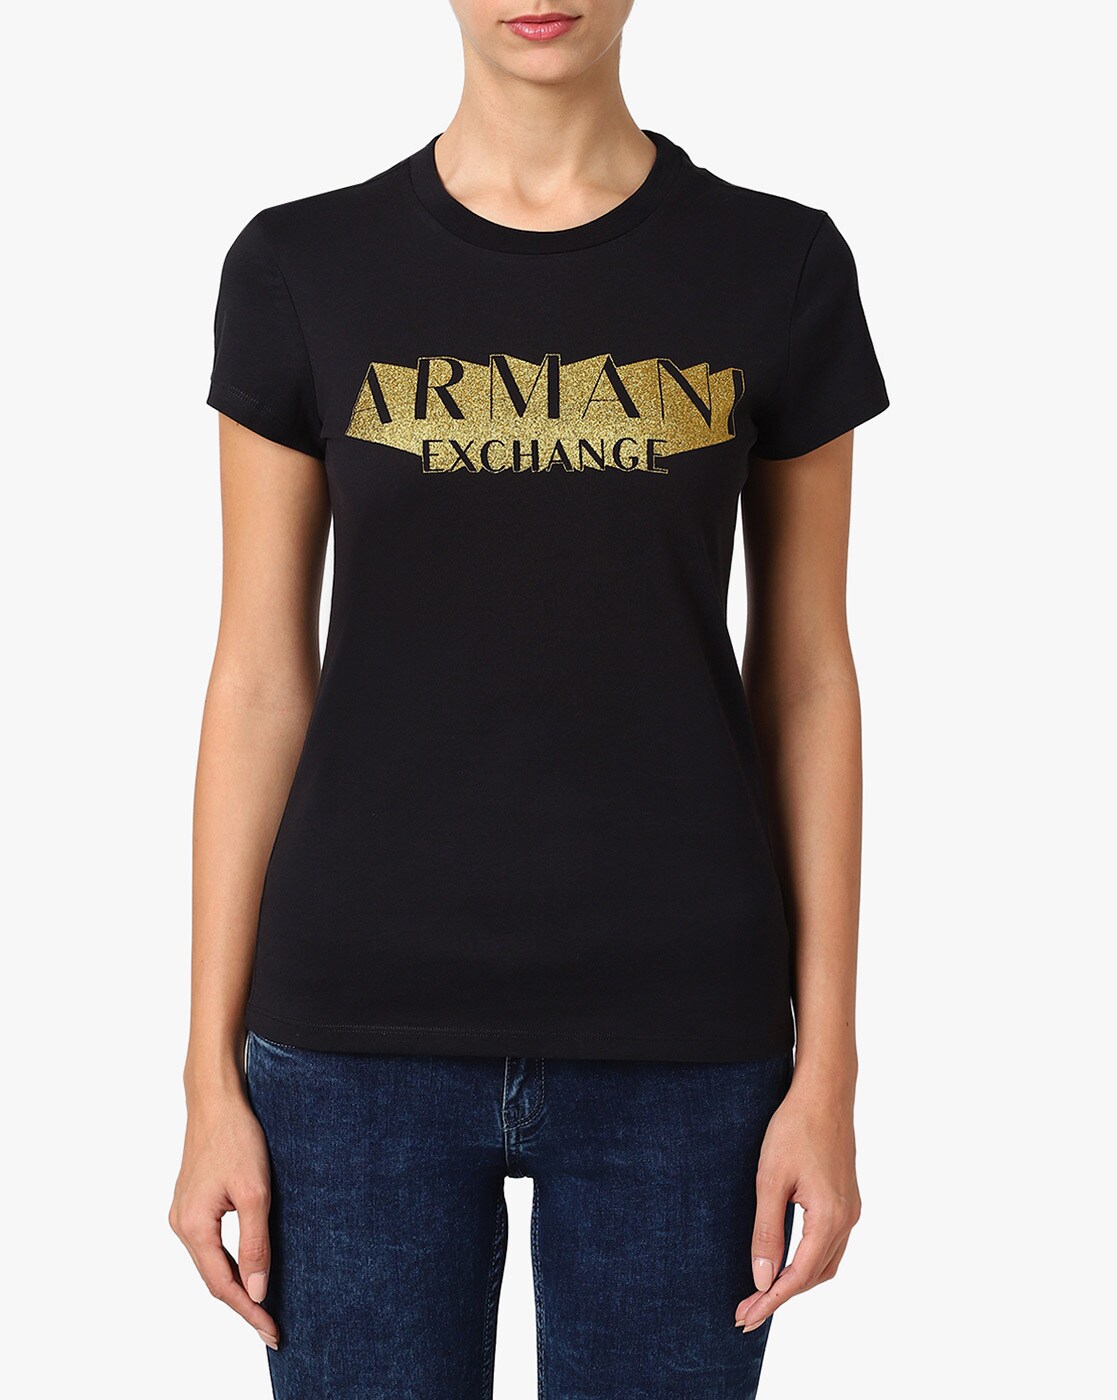 armani exchange t shirt online